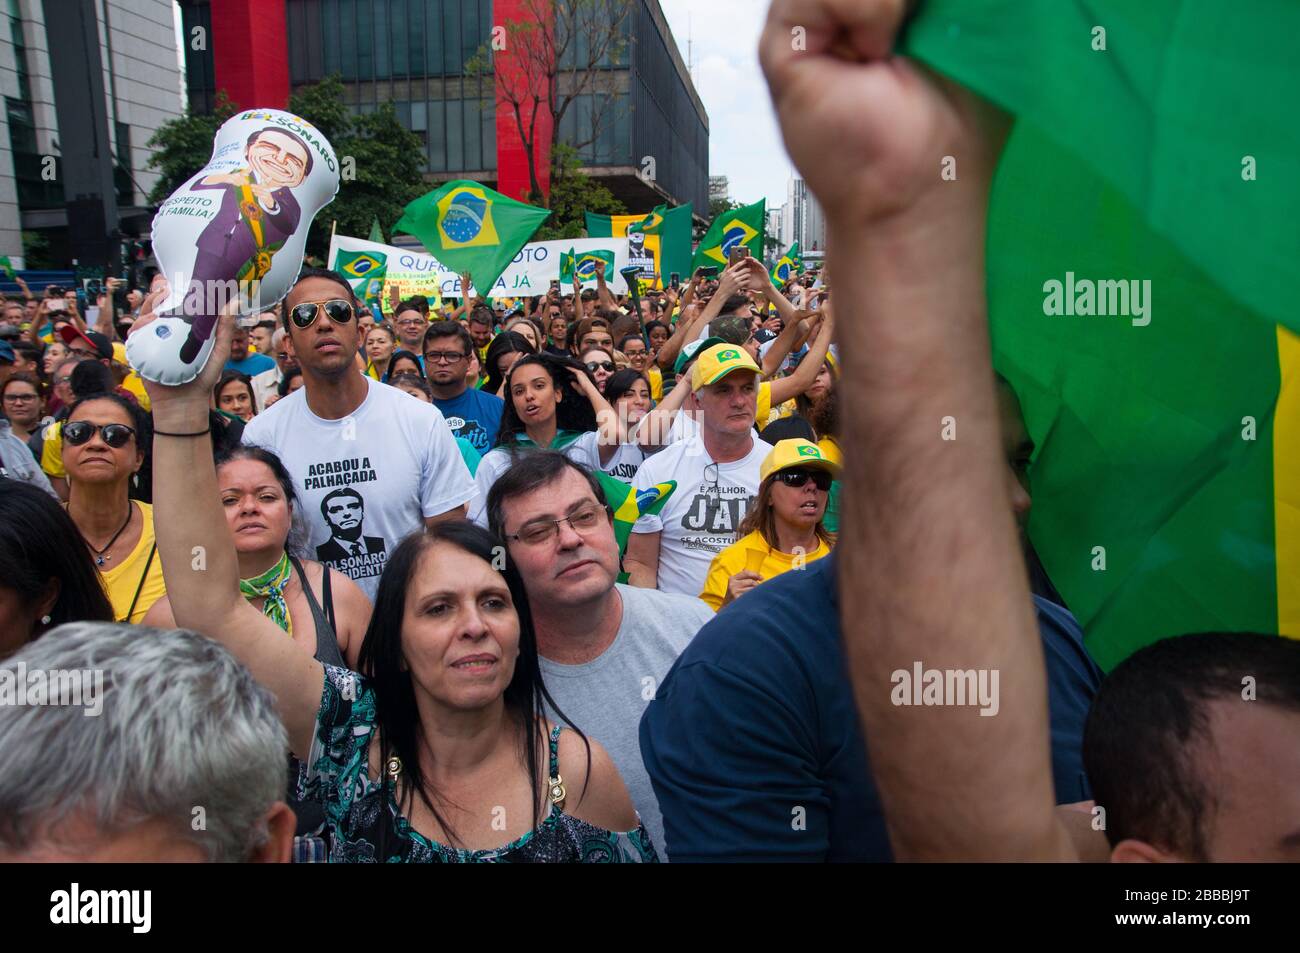 Sao Paulo, SP, Brazil, 2018/10/21, Demonstration pro presidential candidate Jair Bolsonaro on Paulista Avenue, inflatable dolls, t-shirts and flags ar Stock Photo